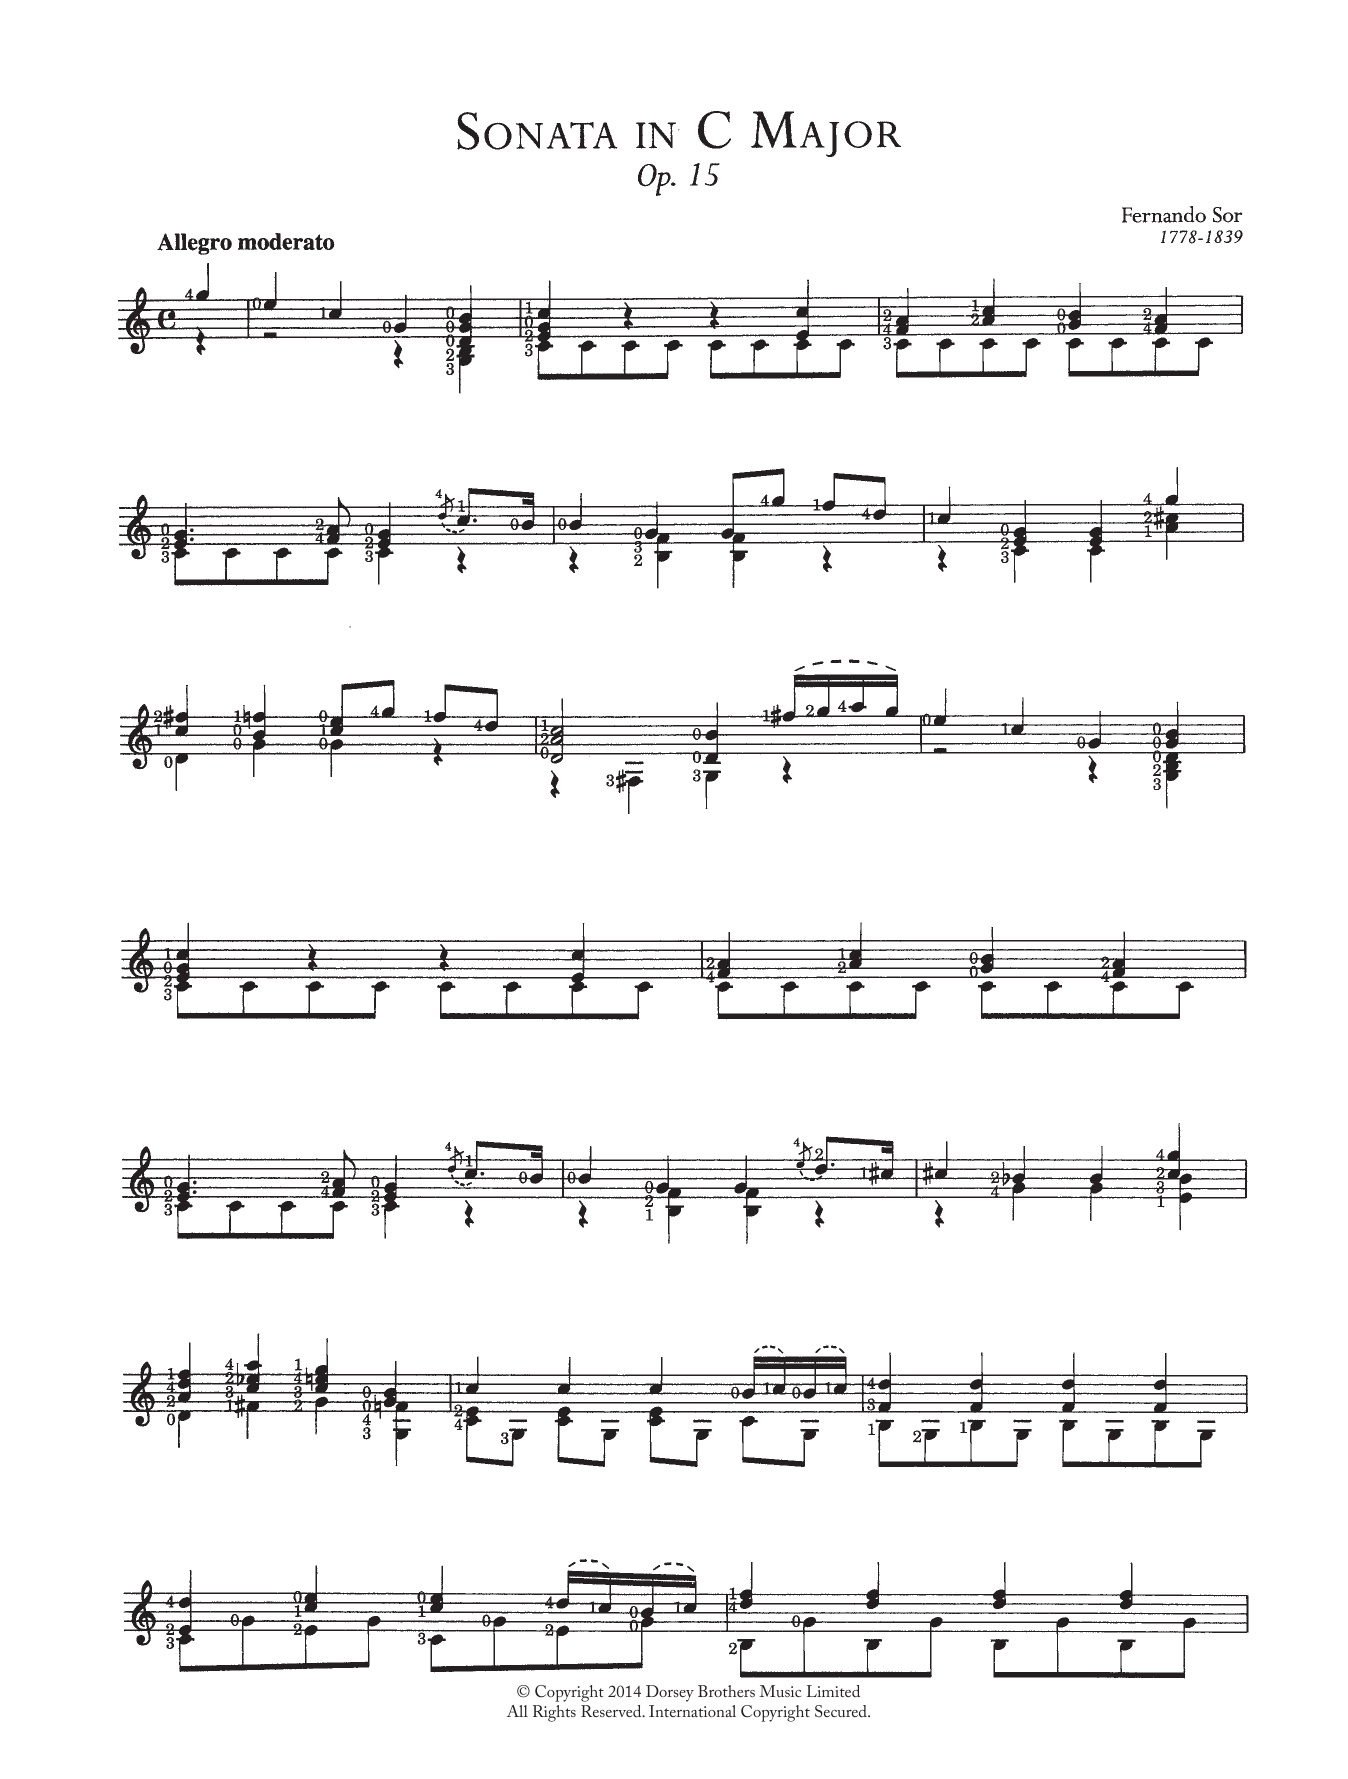 Fernando Sor Sonata In C Major, Op.15 Sheet Music Notes & Chords for Easy Guitar - Download or Print PDF